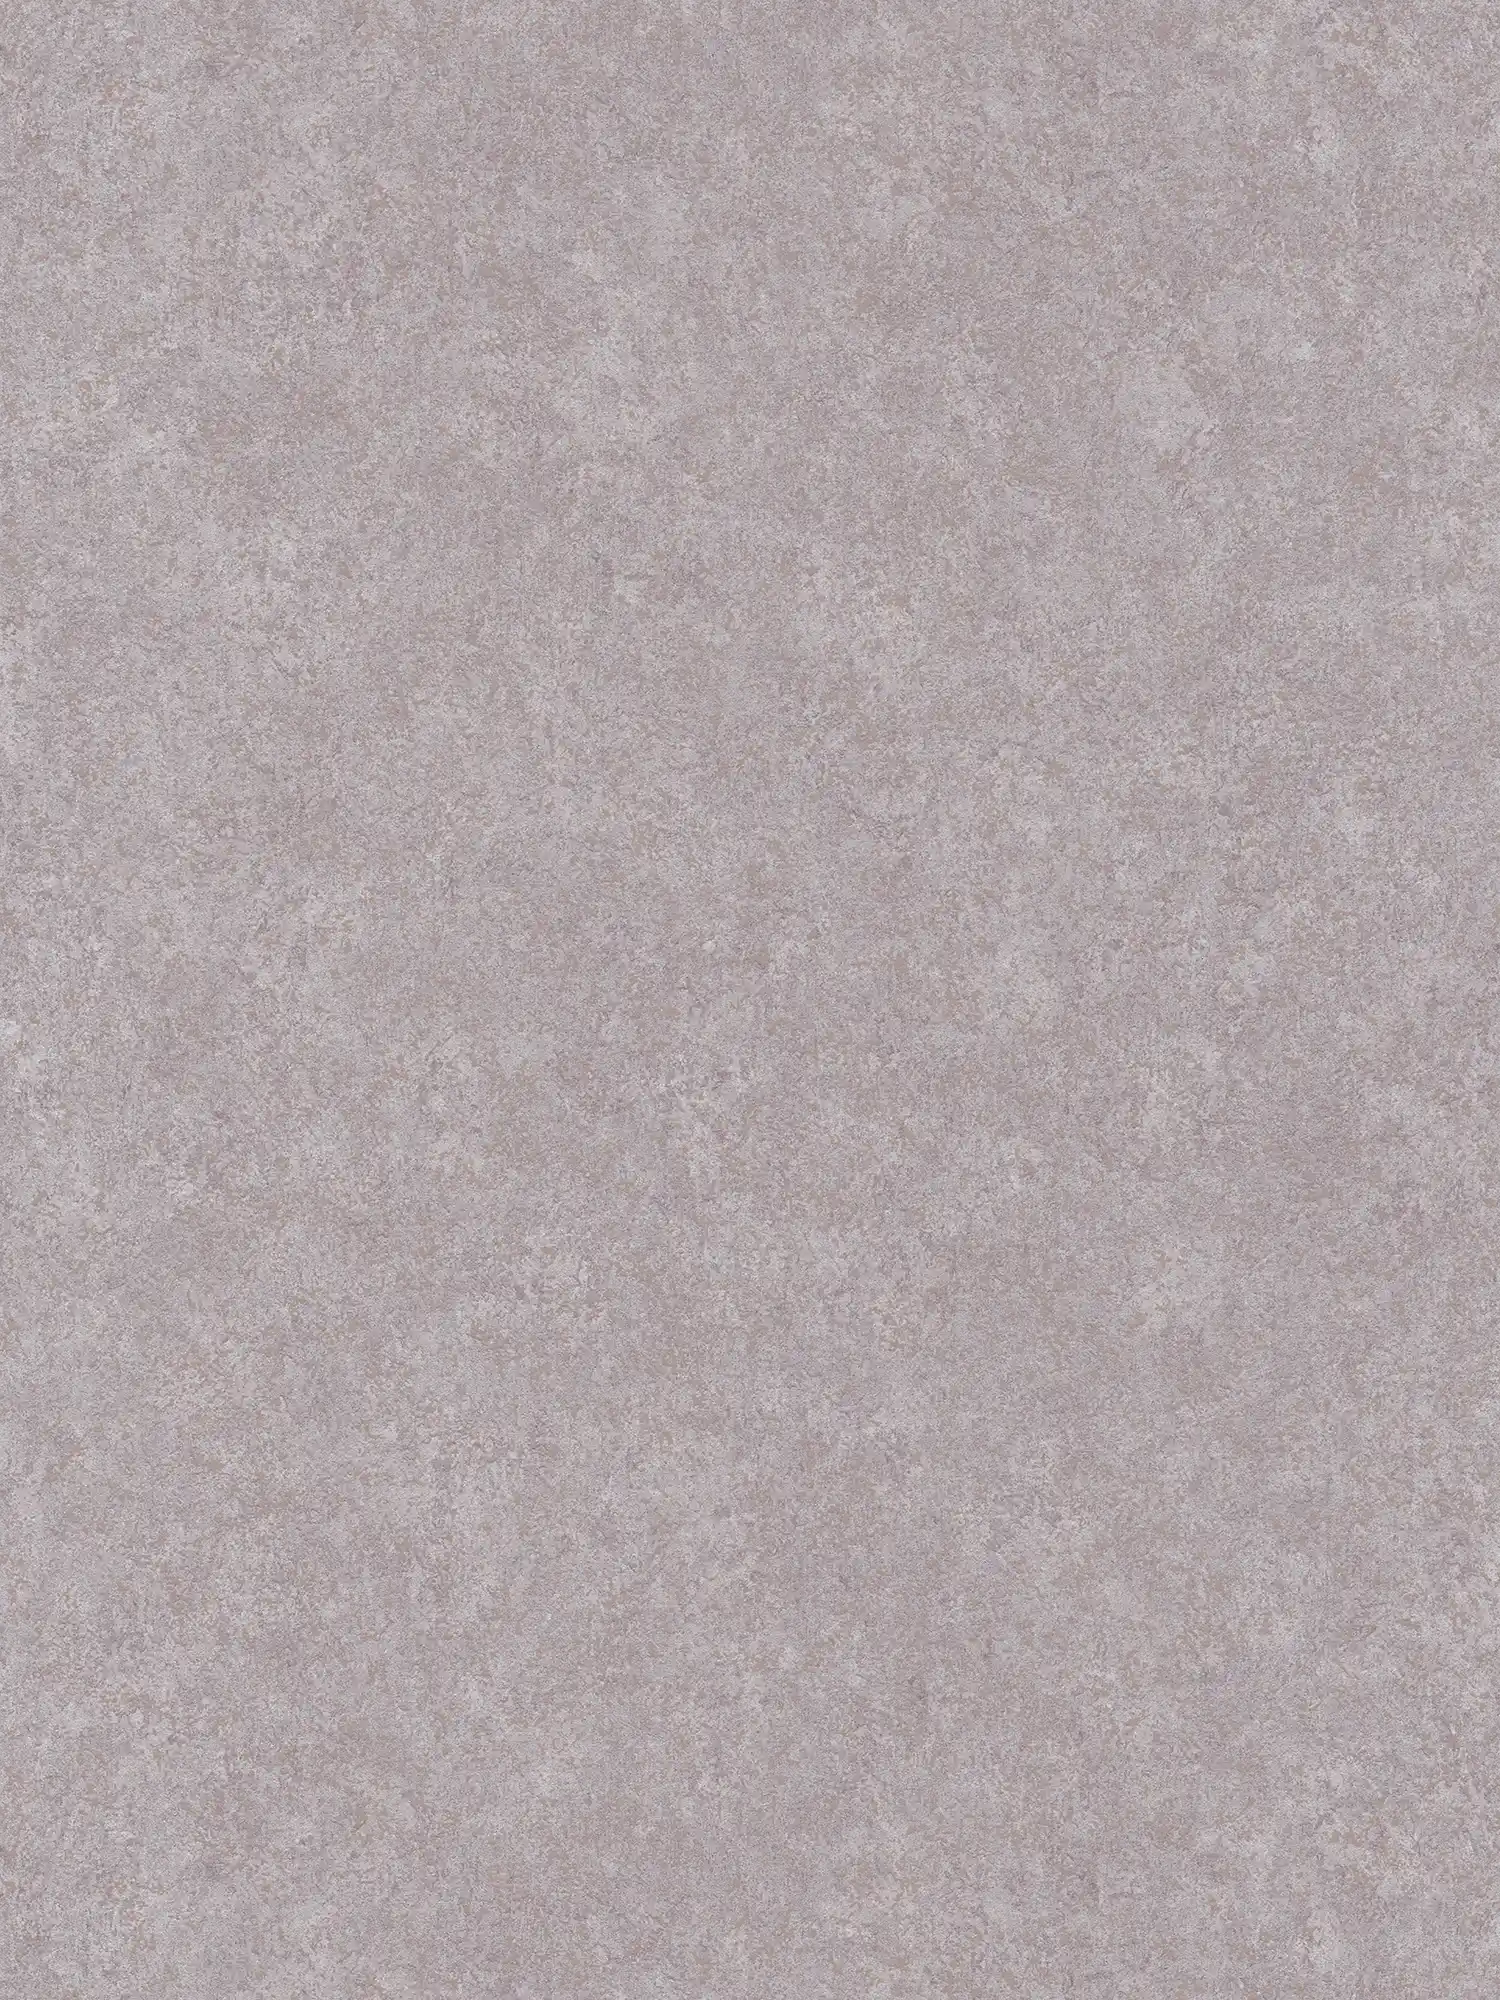 Carta da parati neutra effetto gesso con superficie opaca - grigio
